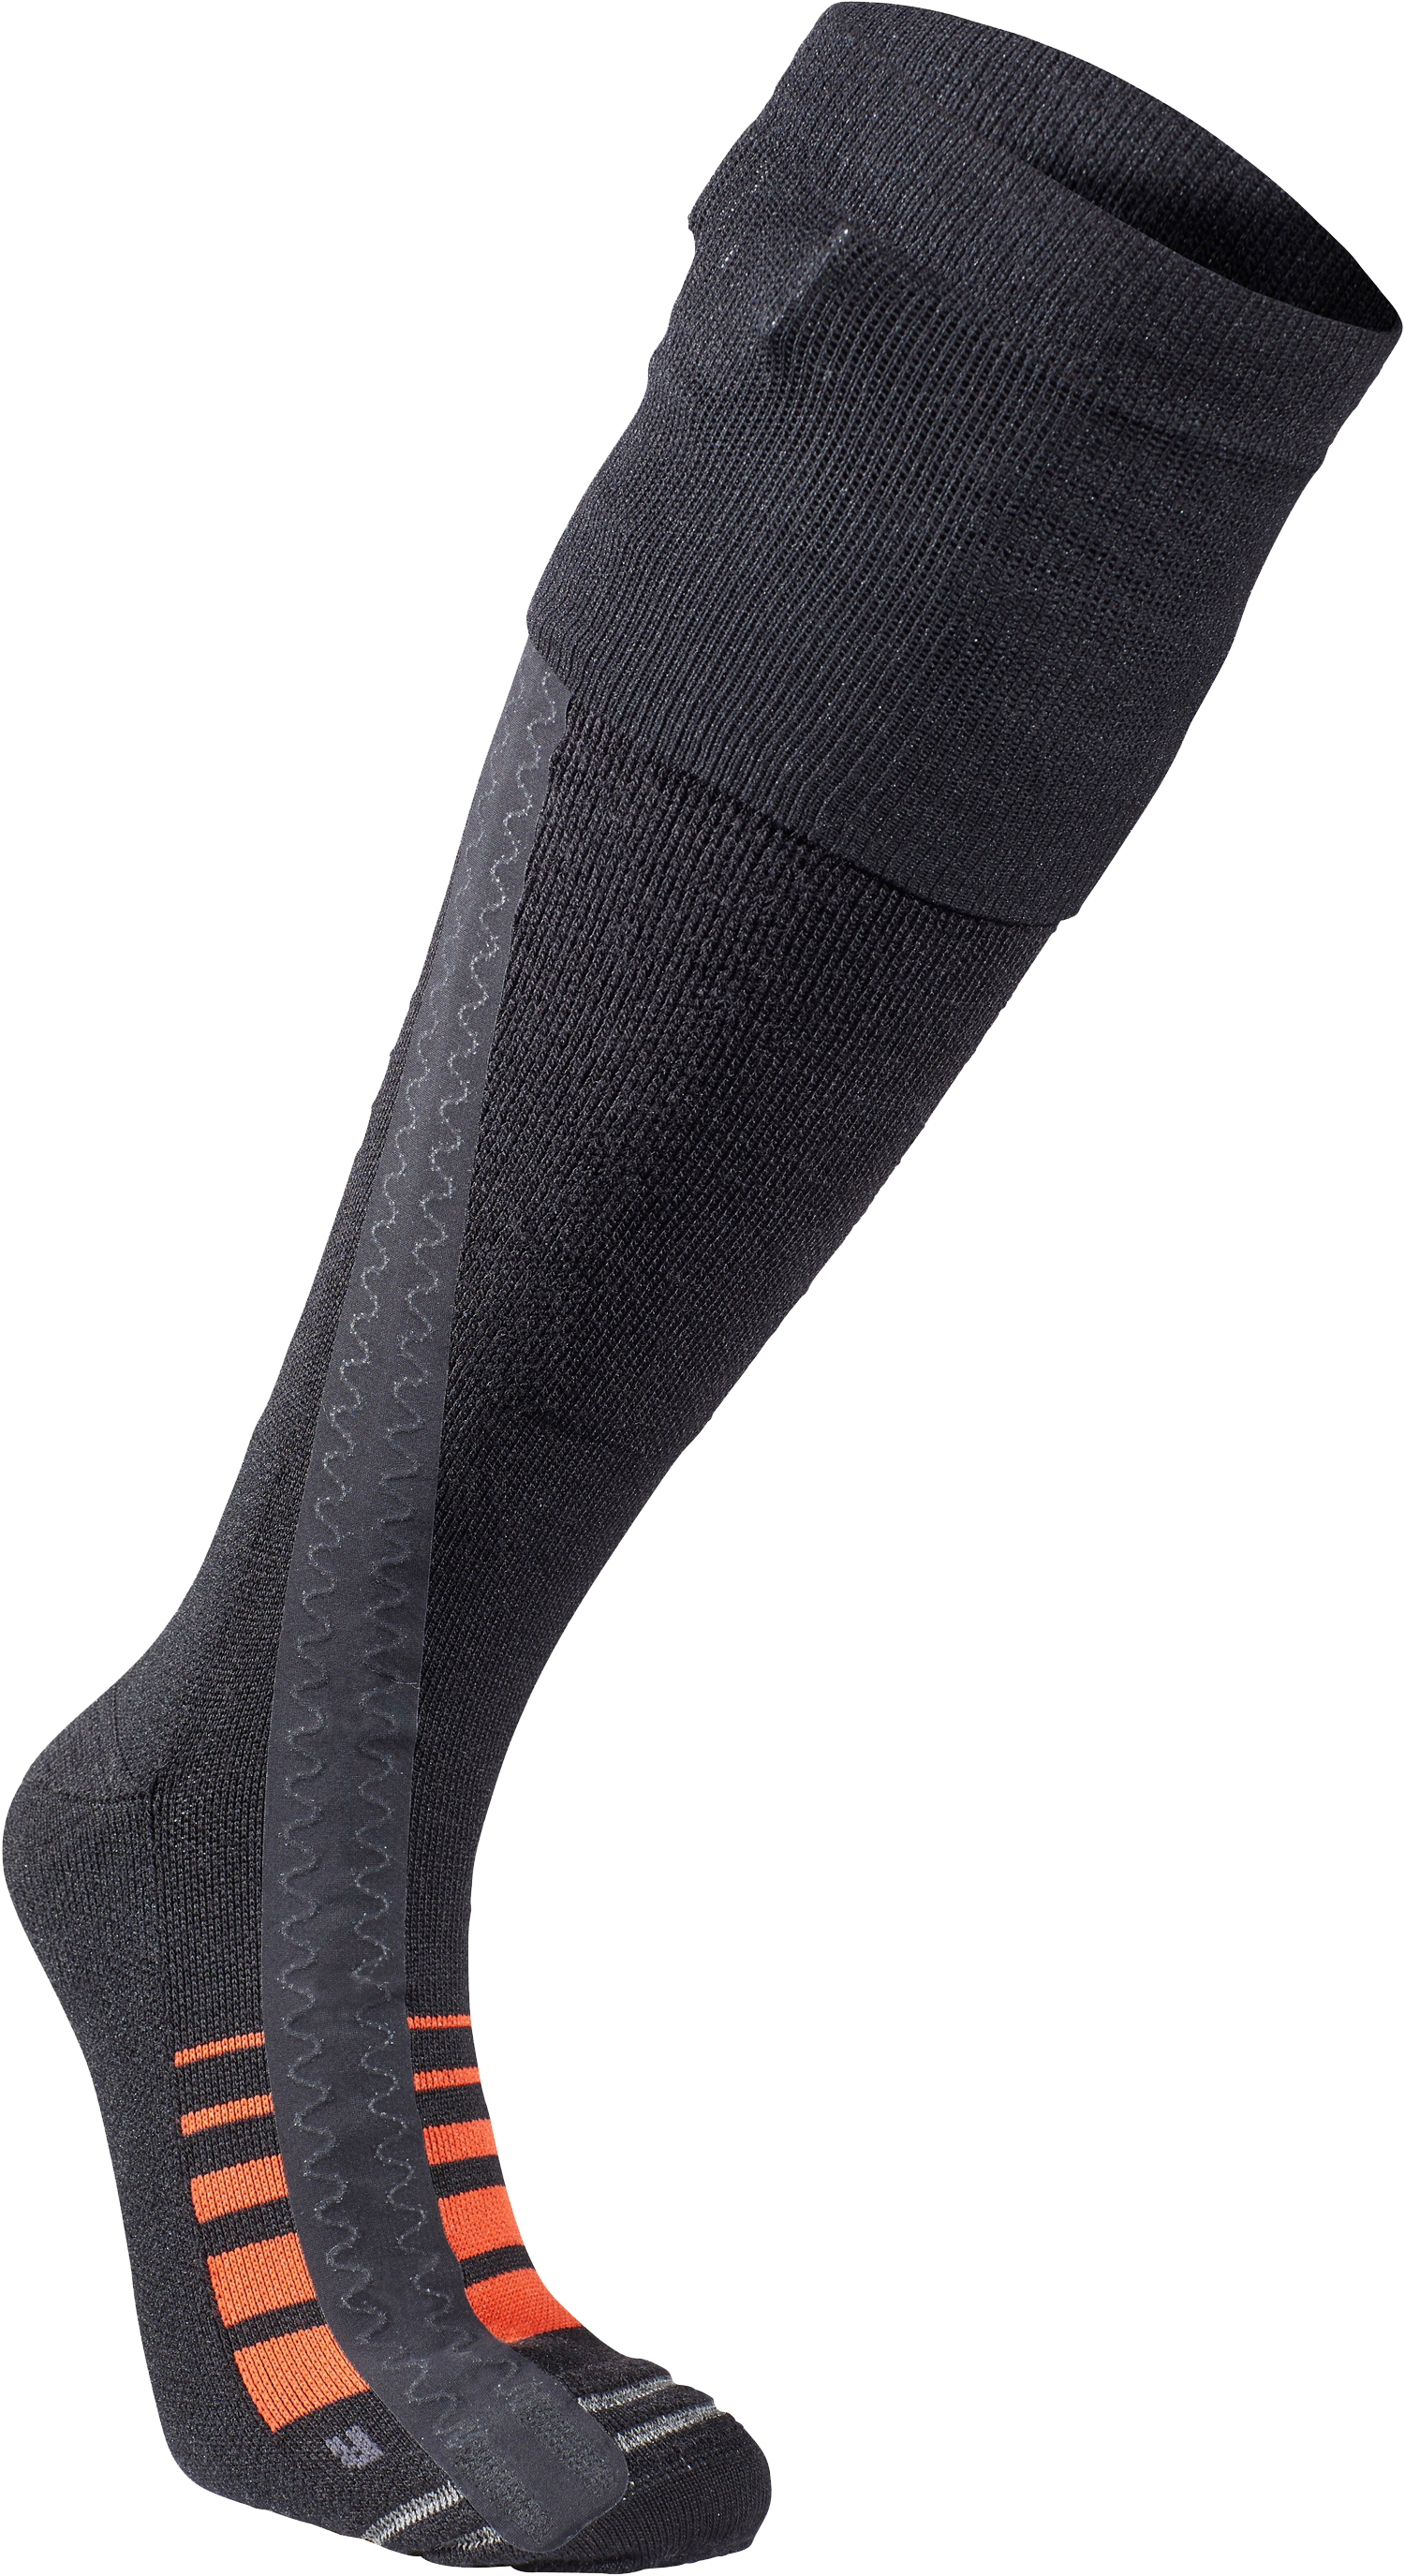 Winter Athletic & Compression Socks for Men & Women